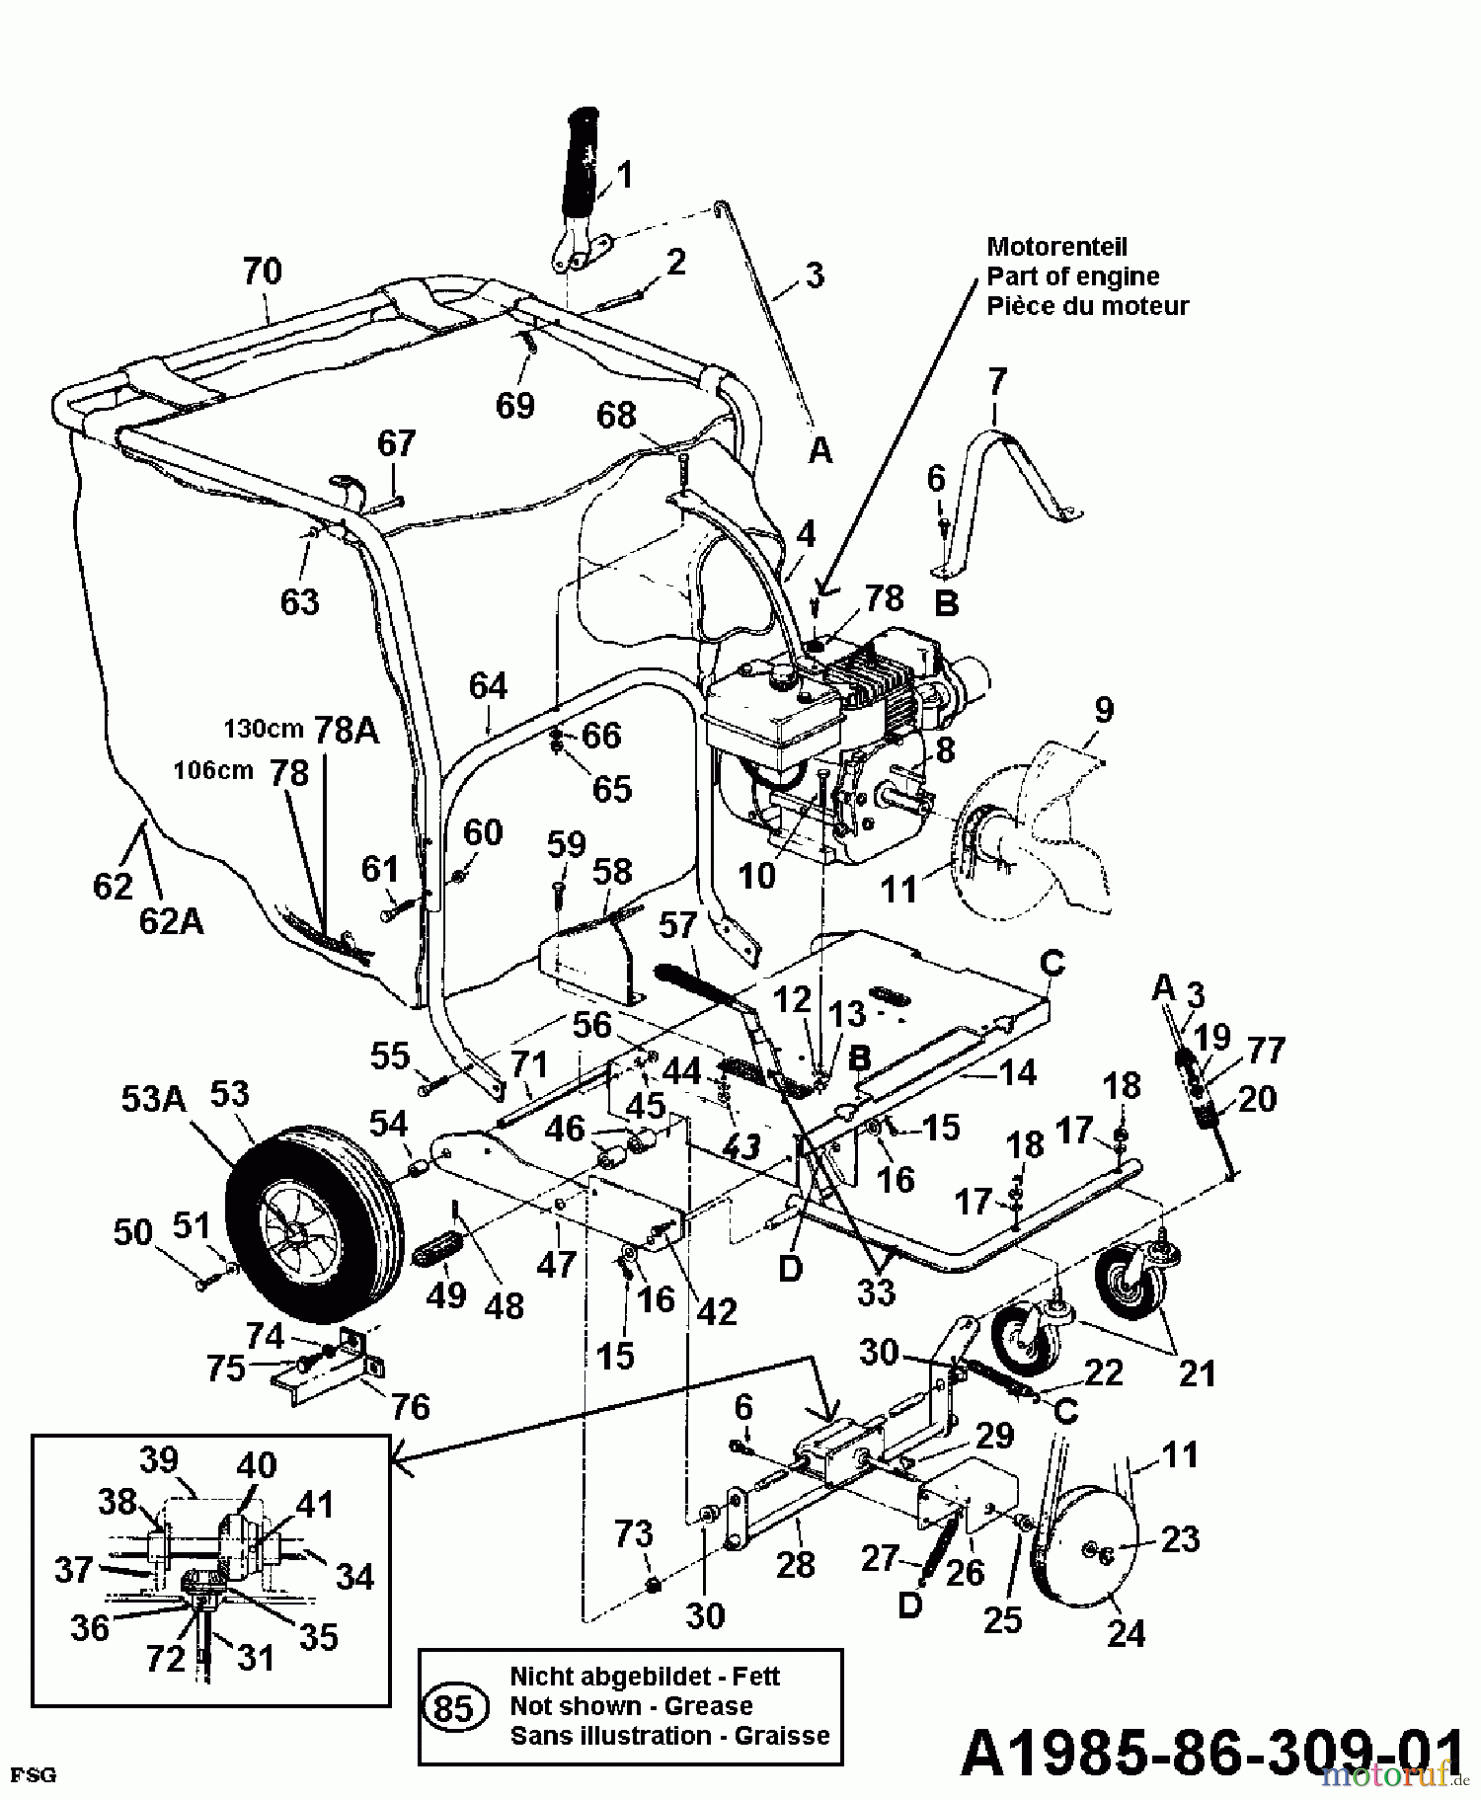  MTD Leaf blower, Blower vac Vacu-Jet-Star 244-6850  (1984) Basic machine